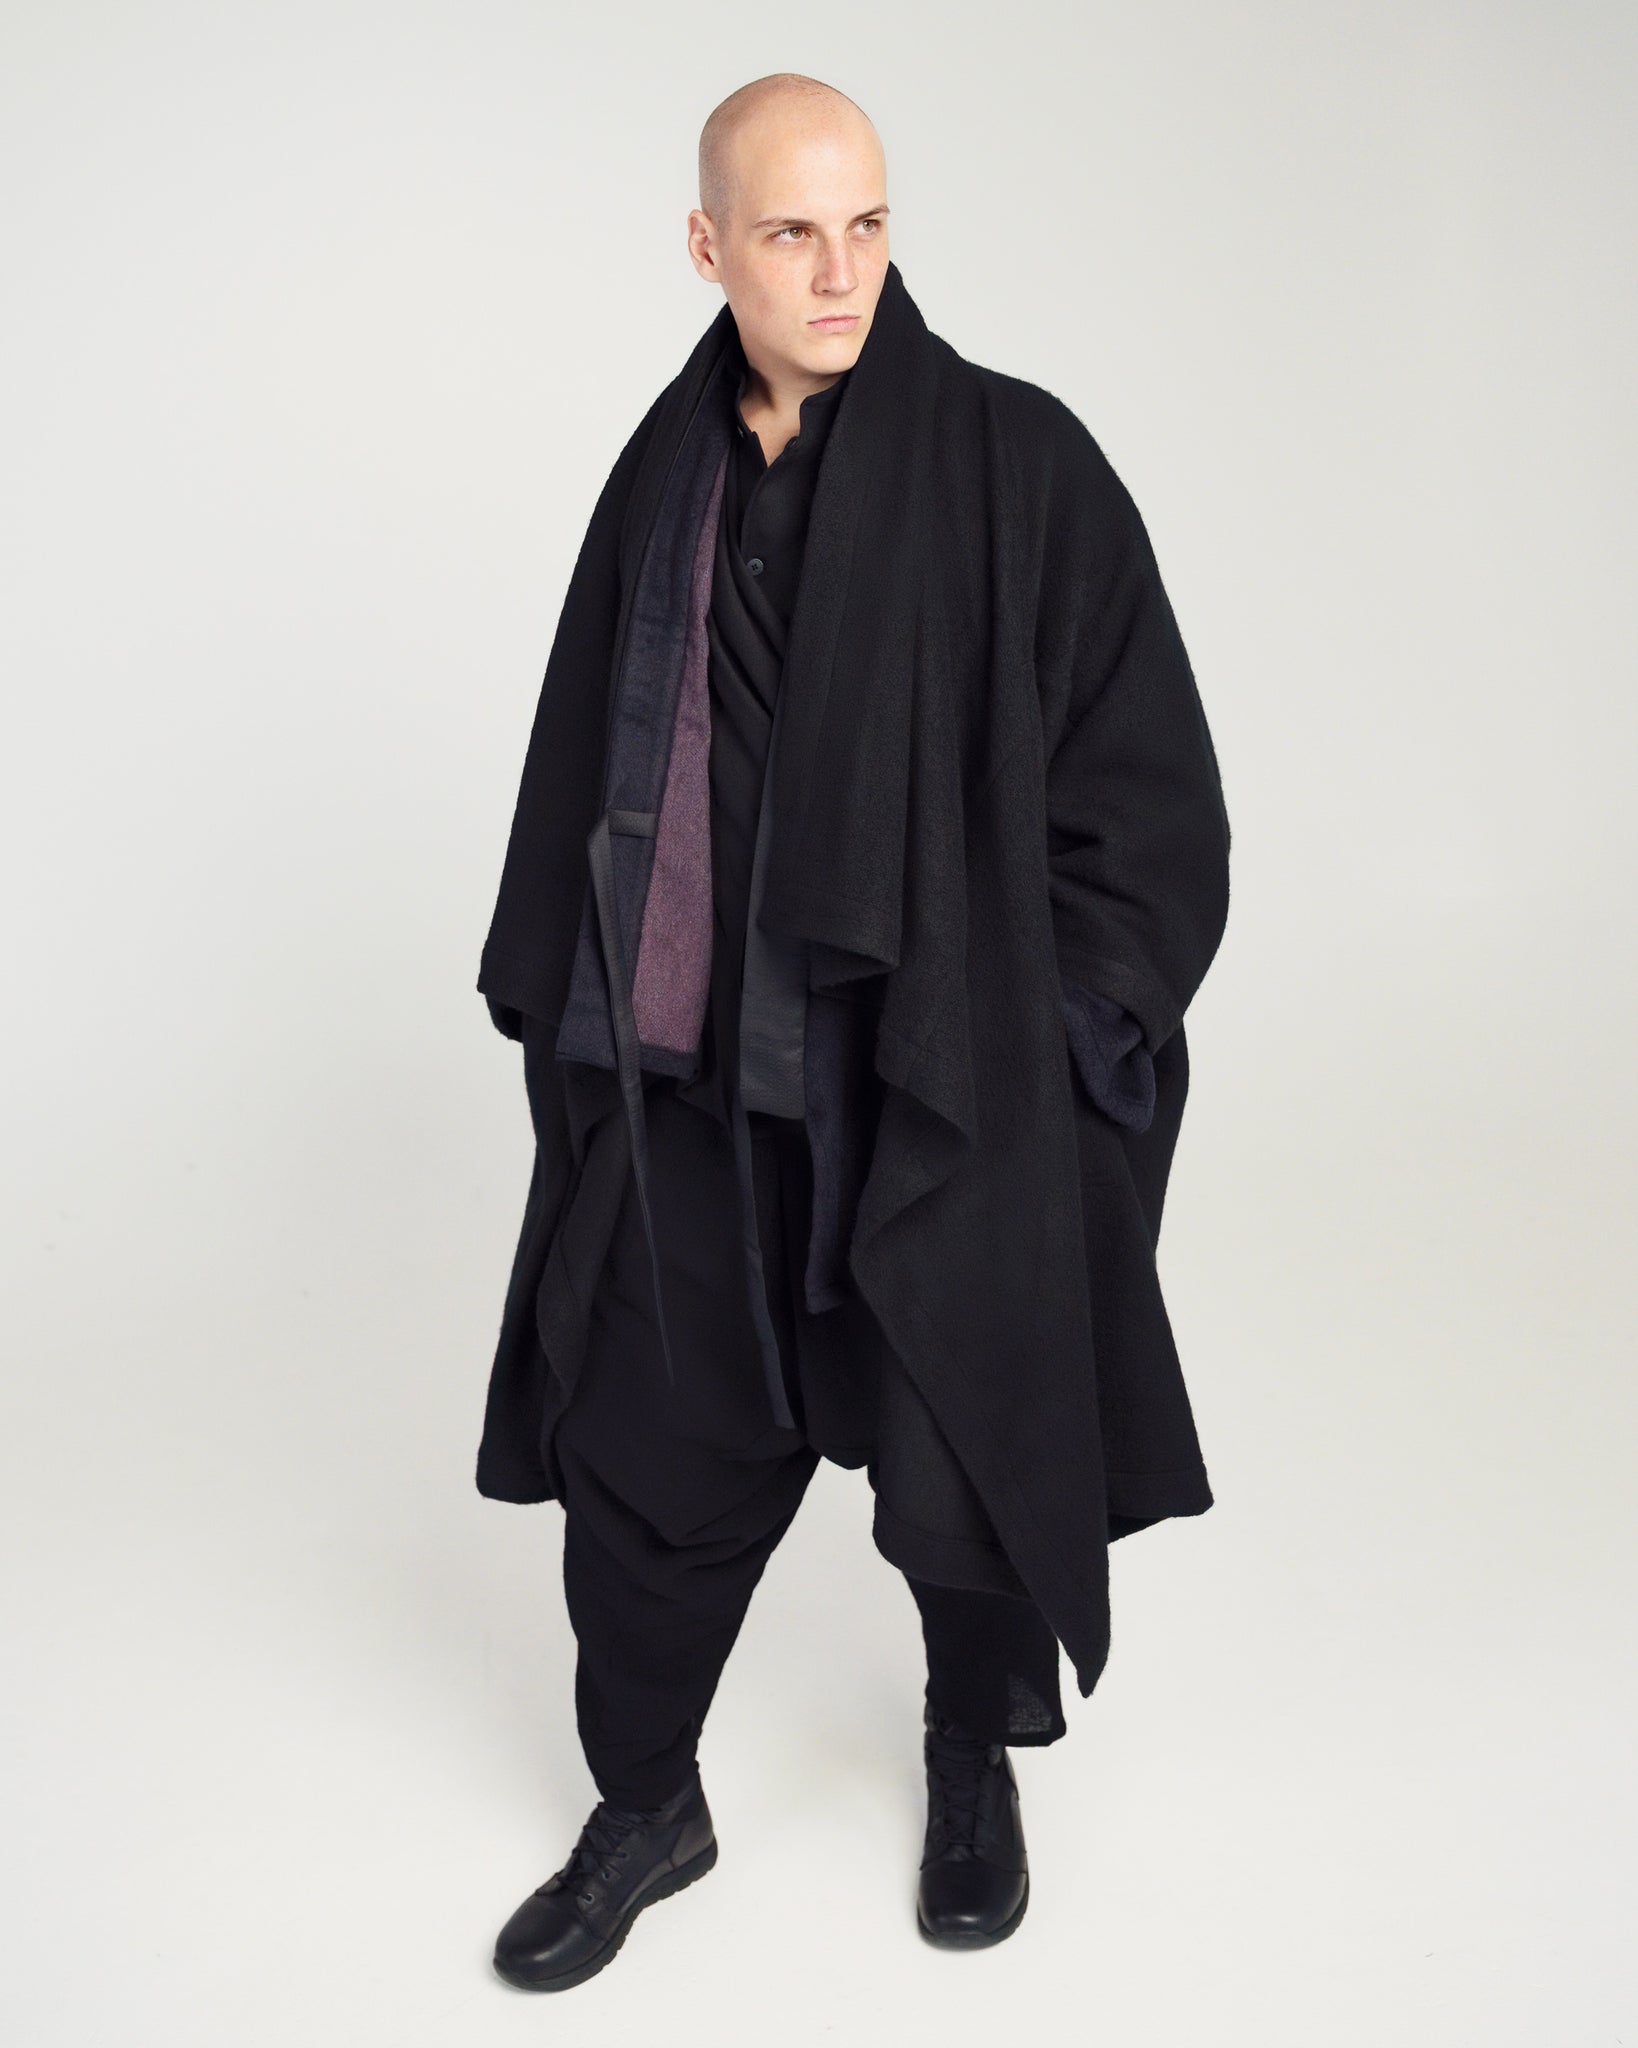 ROSEN Classics O-Ren Coat in Black Boiled Wool